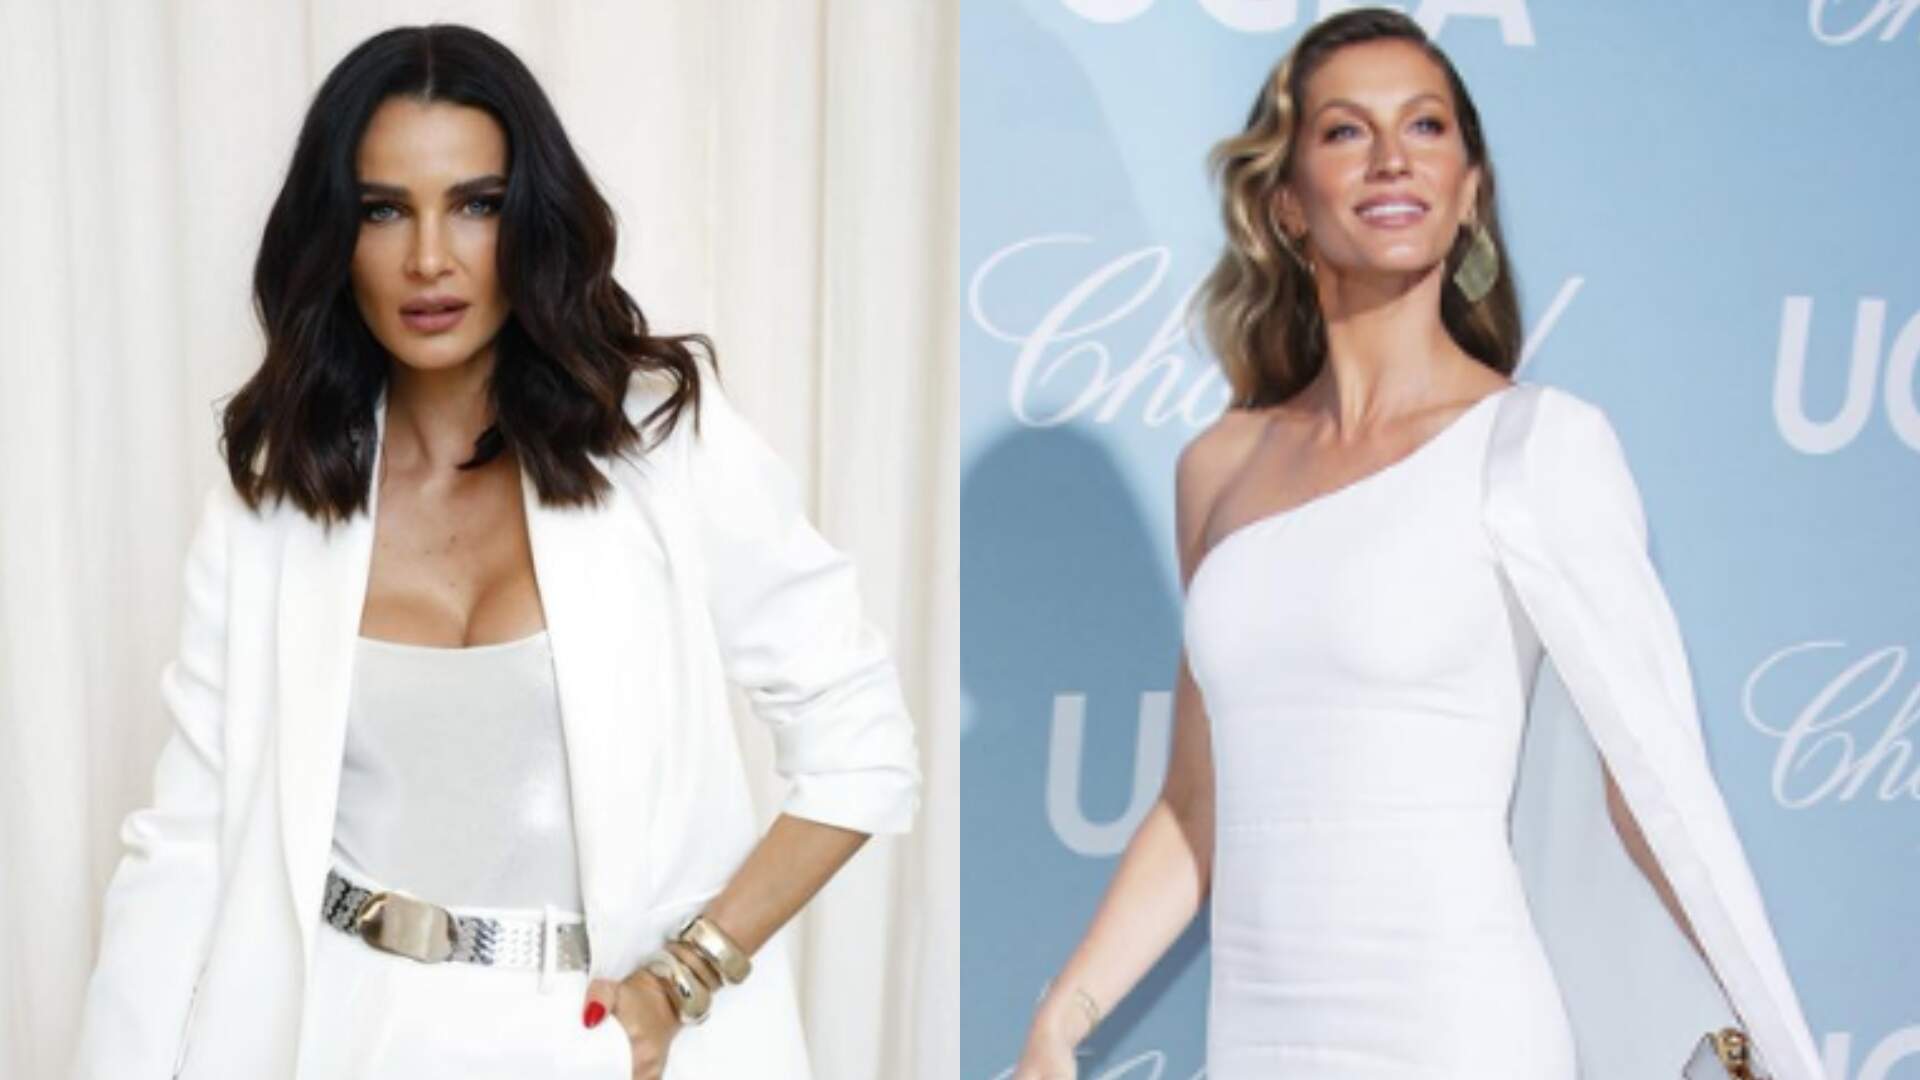 Fernanda Motta e Gisele Bündchen elegem o mesmo look grifado para eventos de gala na mesma noite